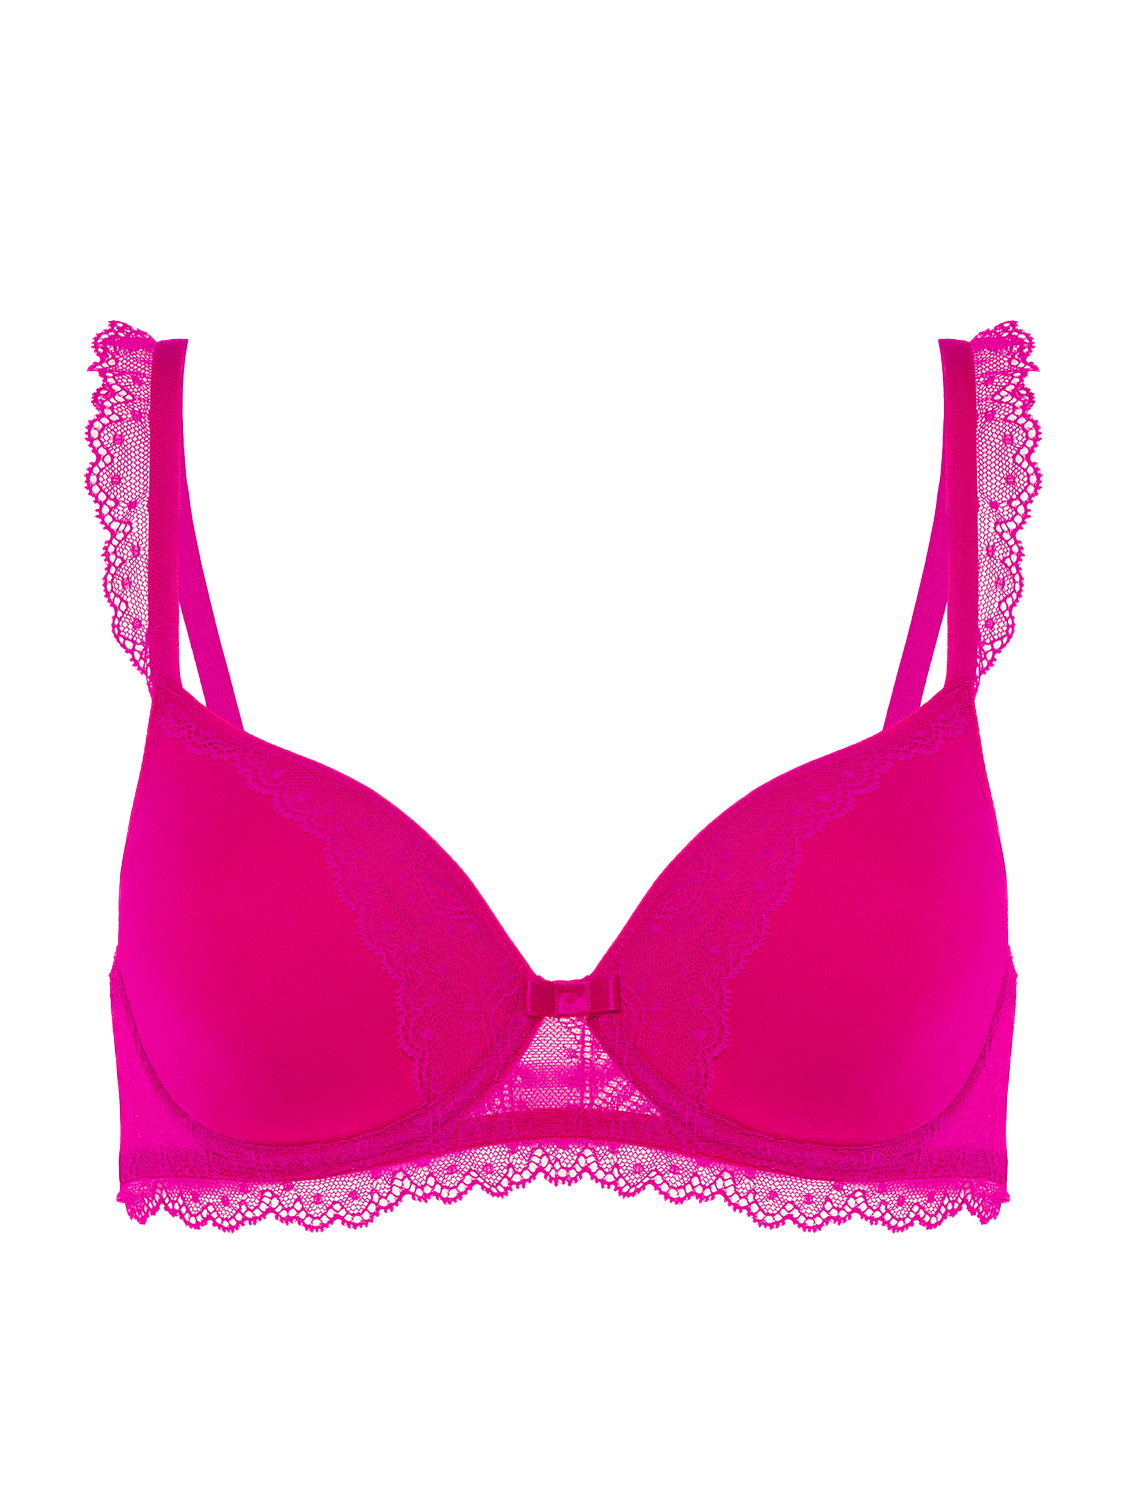 T-Shirt Bras Pink Padded Victoria's Secret Pink Sale